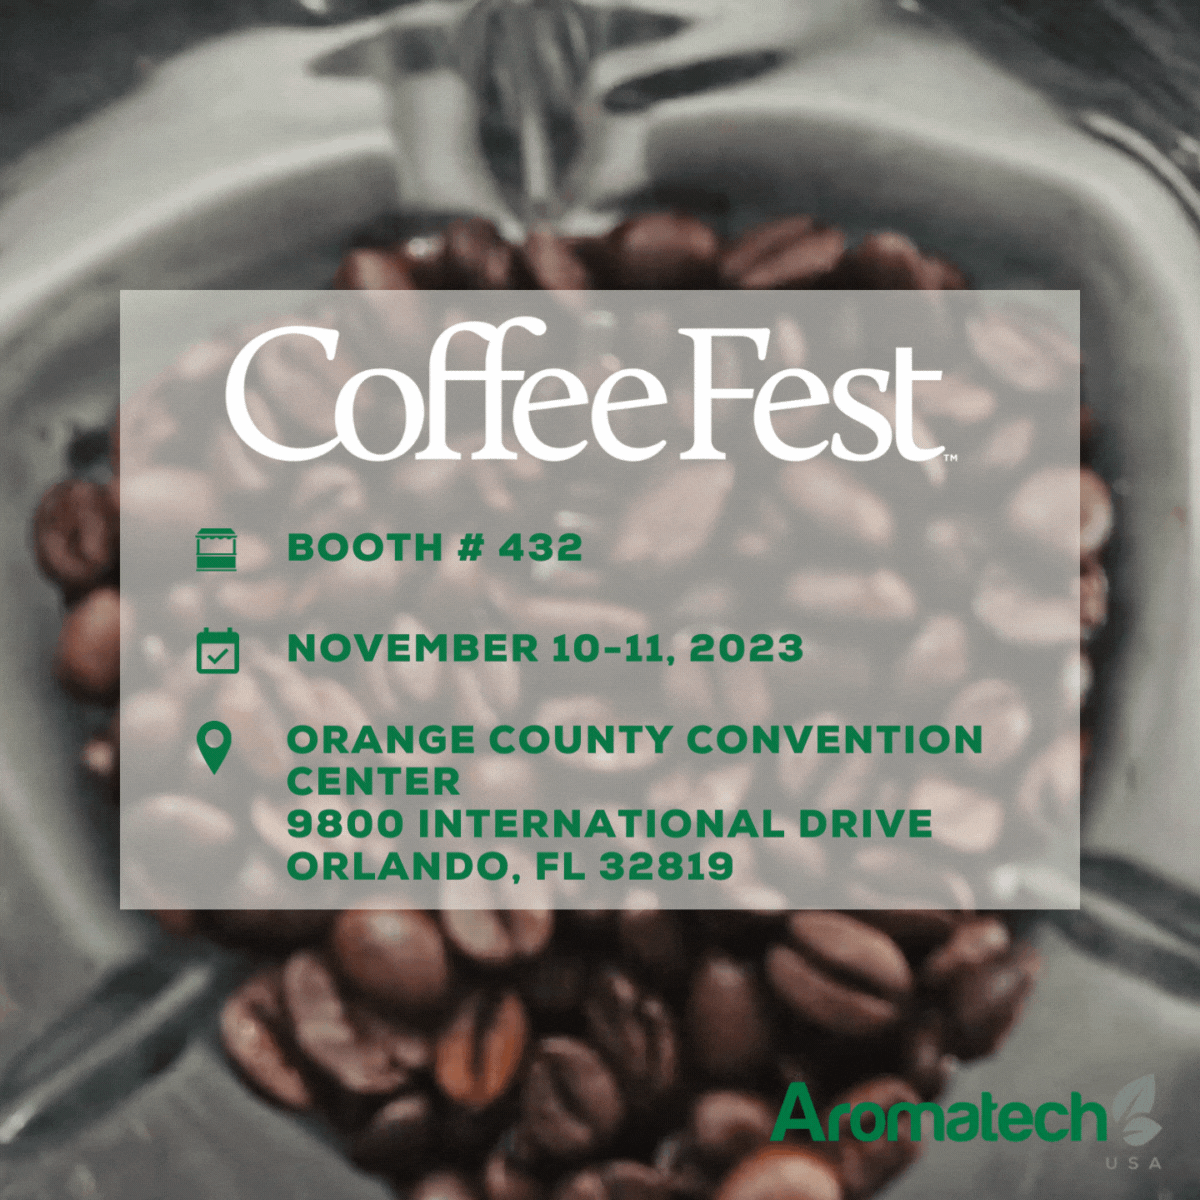 Coffee Fest Orlando: Aromatech USA to Exhibit